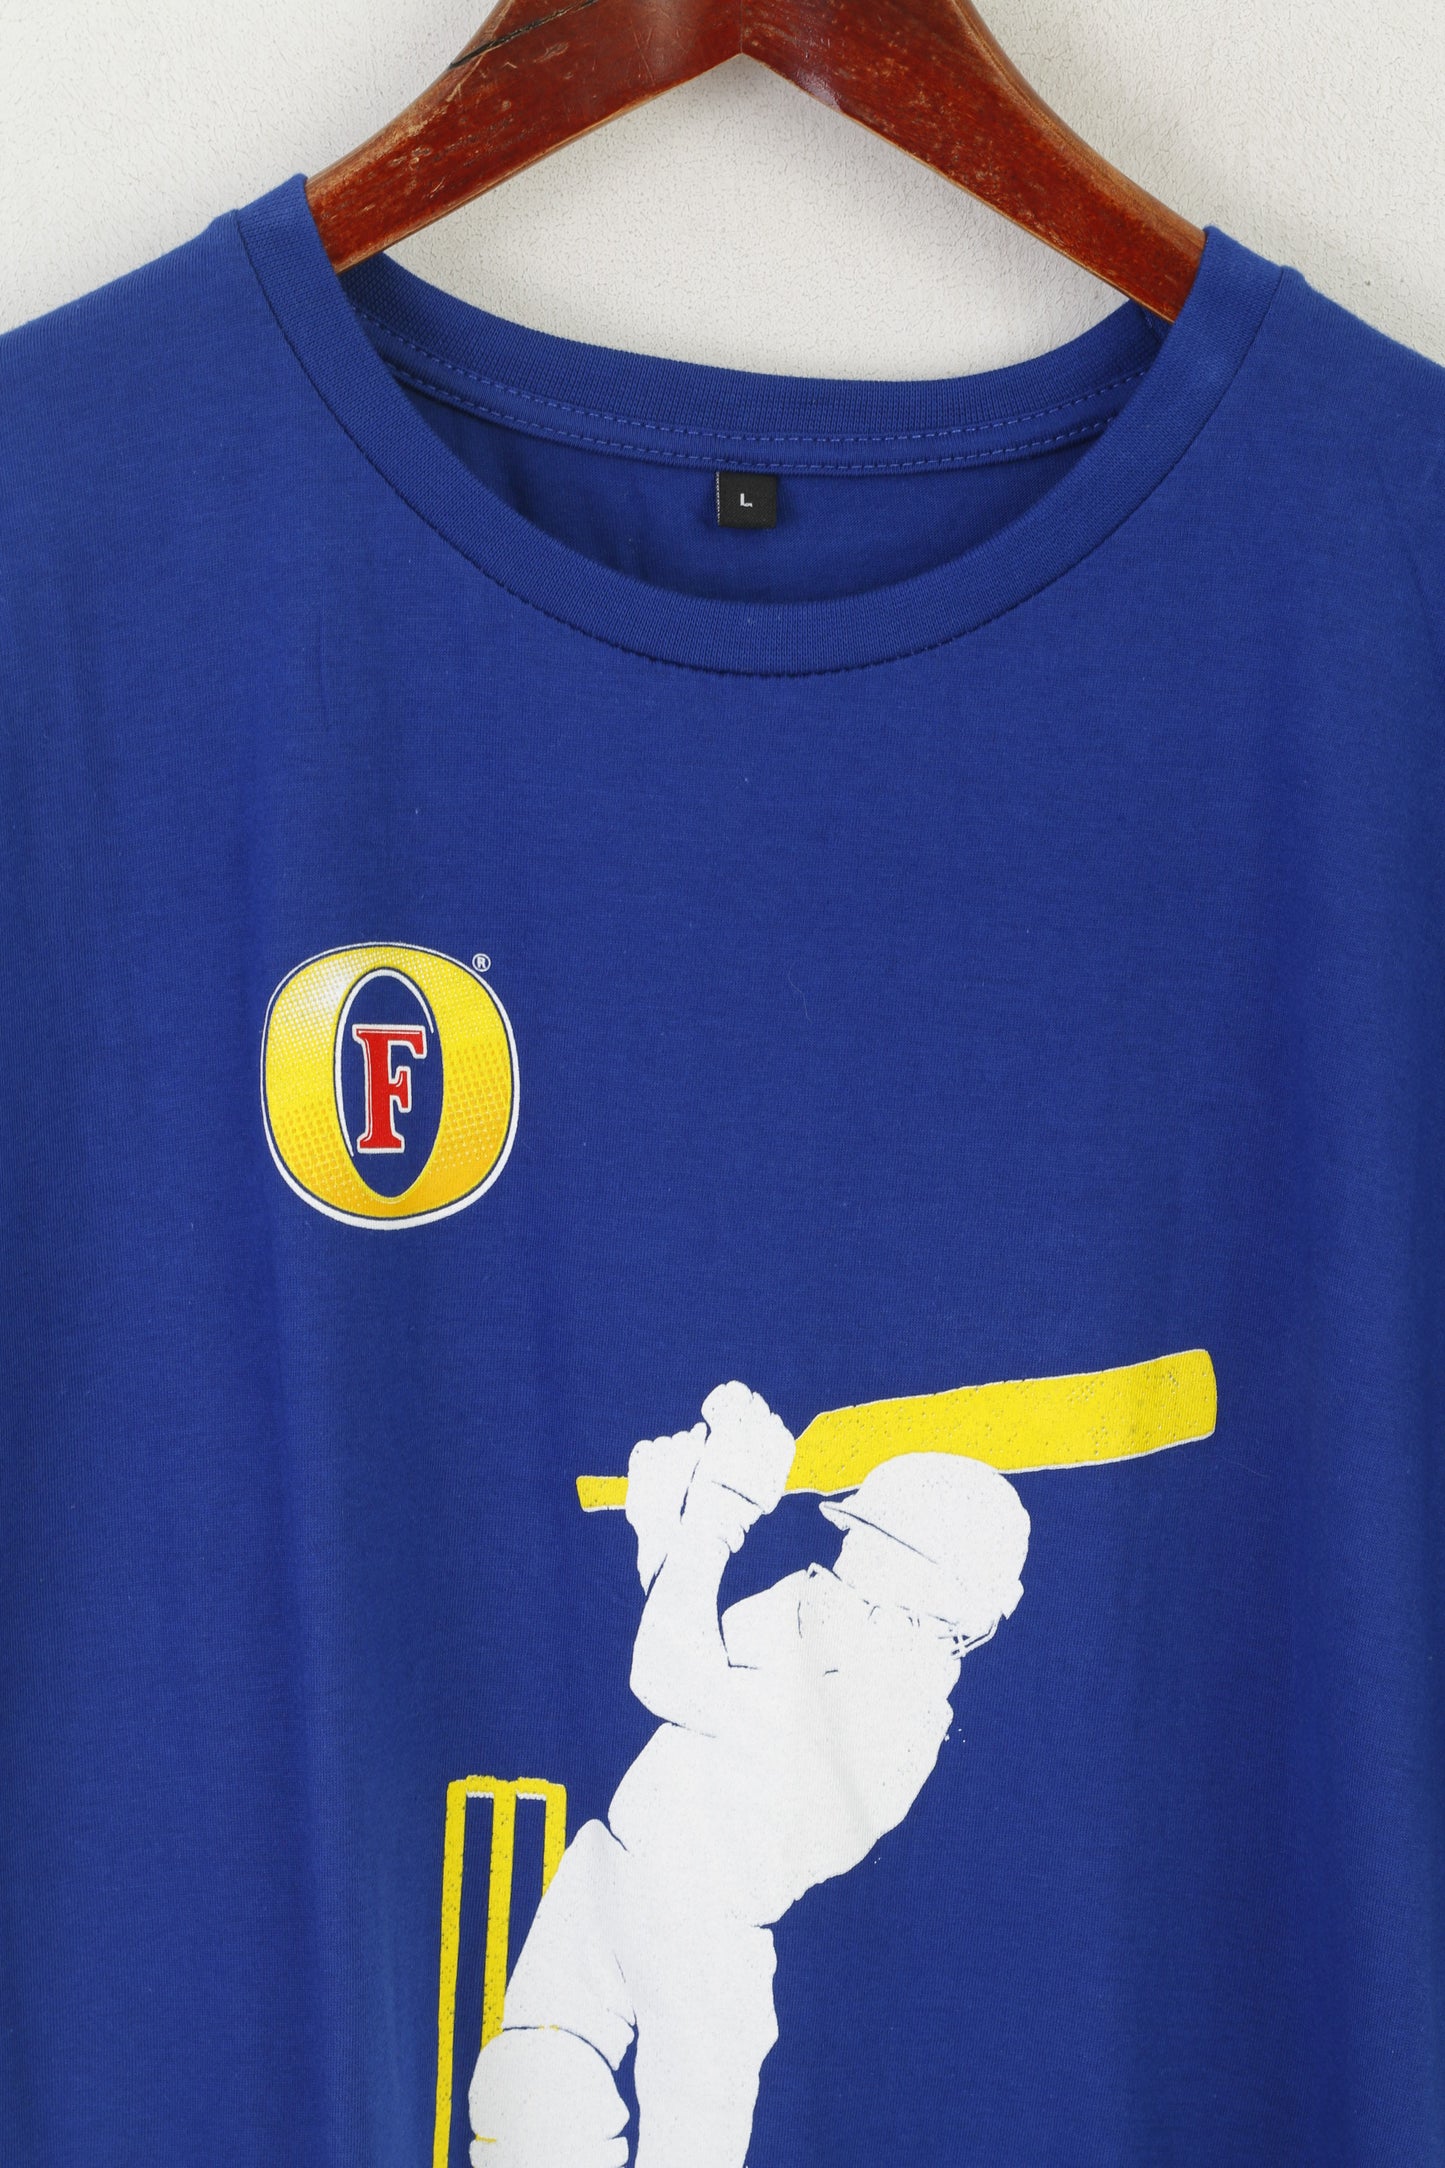 ECB Official Men L (M) Shirt Blue Cotton England Cricket Catcha6 Sport Top